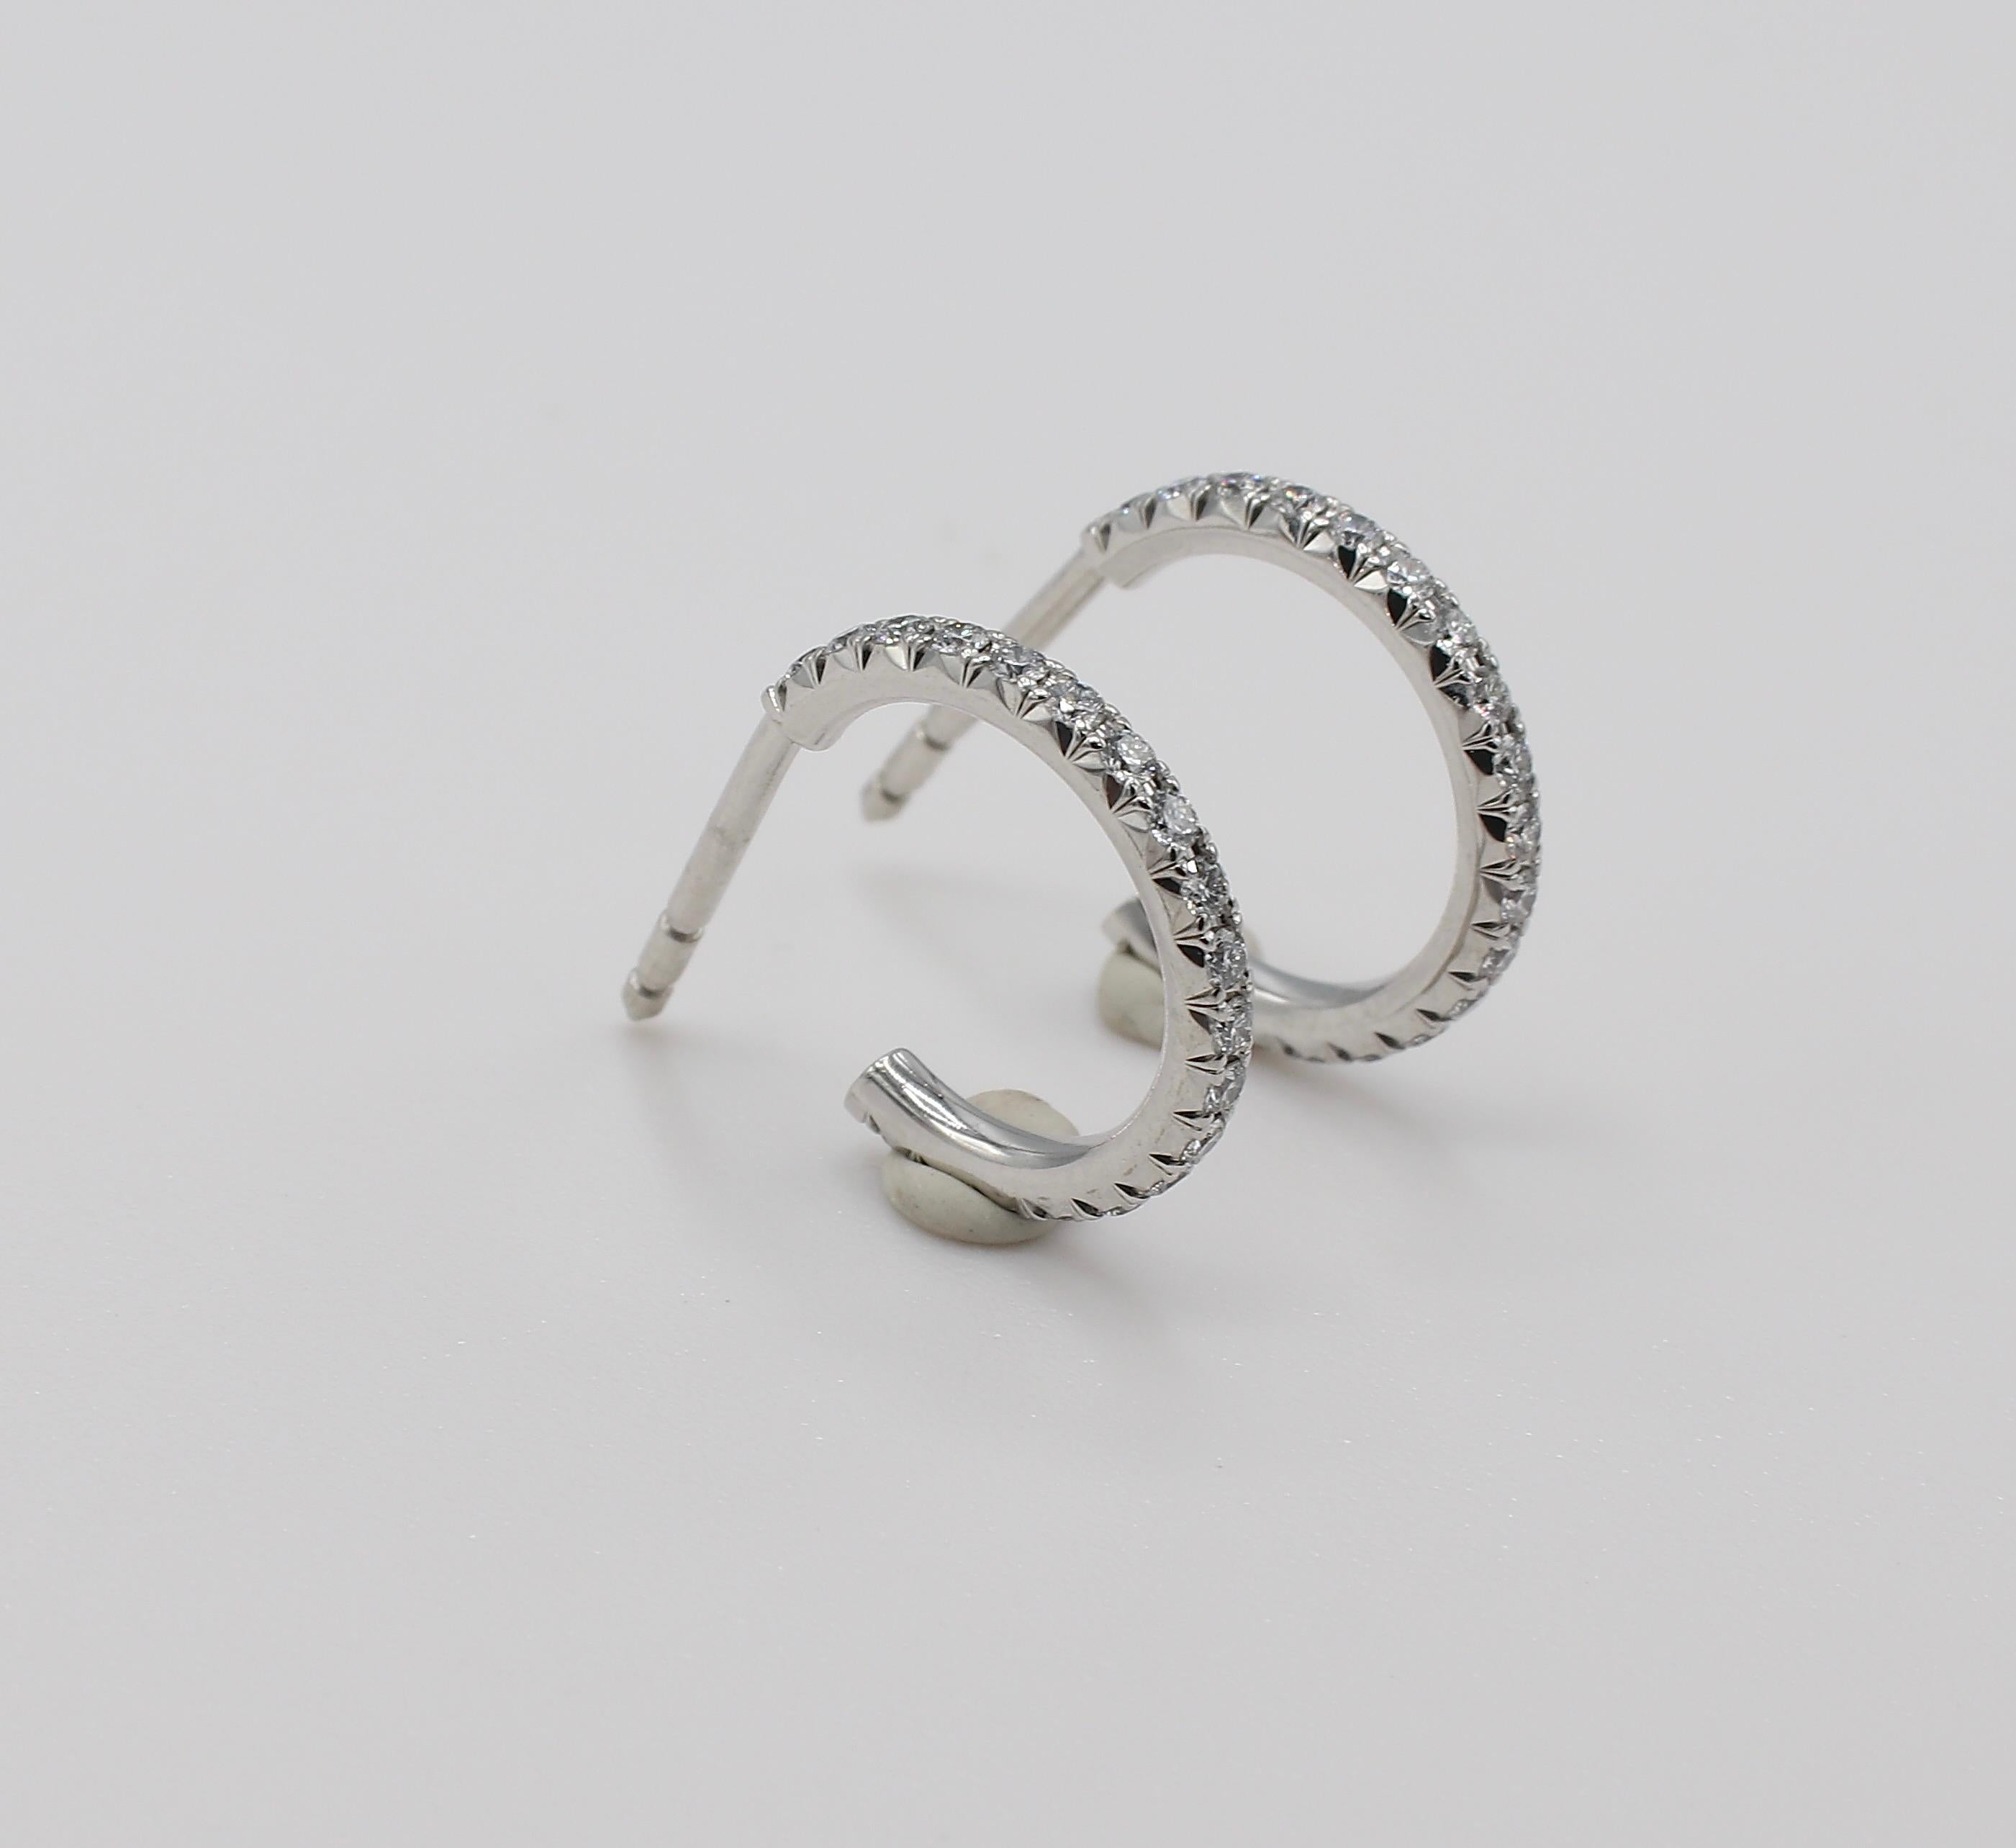 Tiffany & Co. Metro 18K White Gold Diamond Hoop Earrings Small Size 

Metal: 18k white gold
Weight: 1.93 grams
Diamonds: Approx. 0.30 CTW G VS
Diameter: 14MM
Width: 1.7MM
Retail: $3,200

